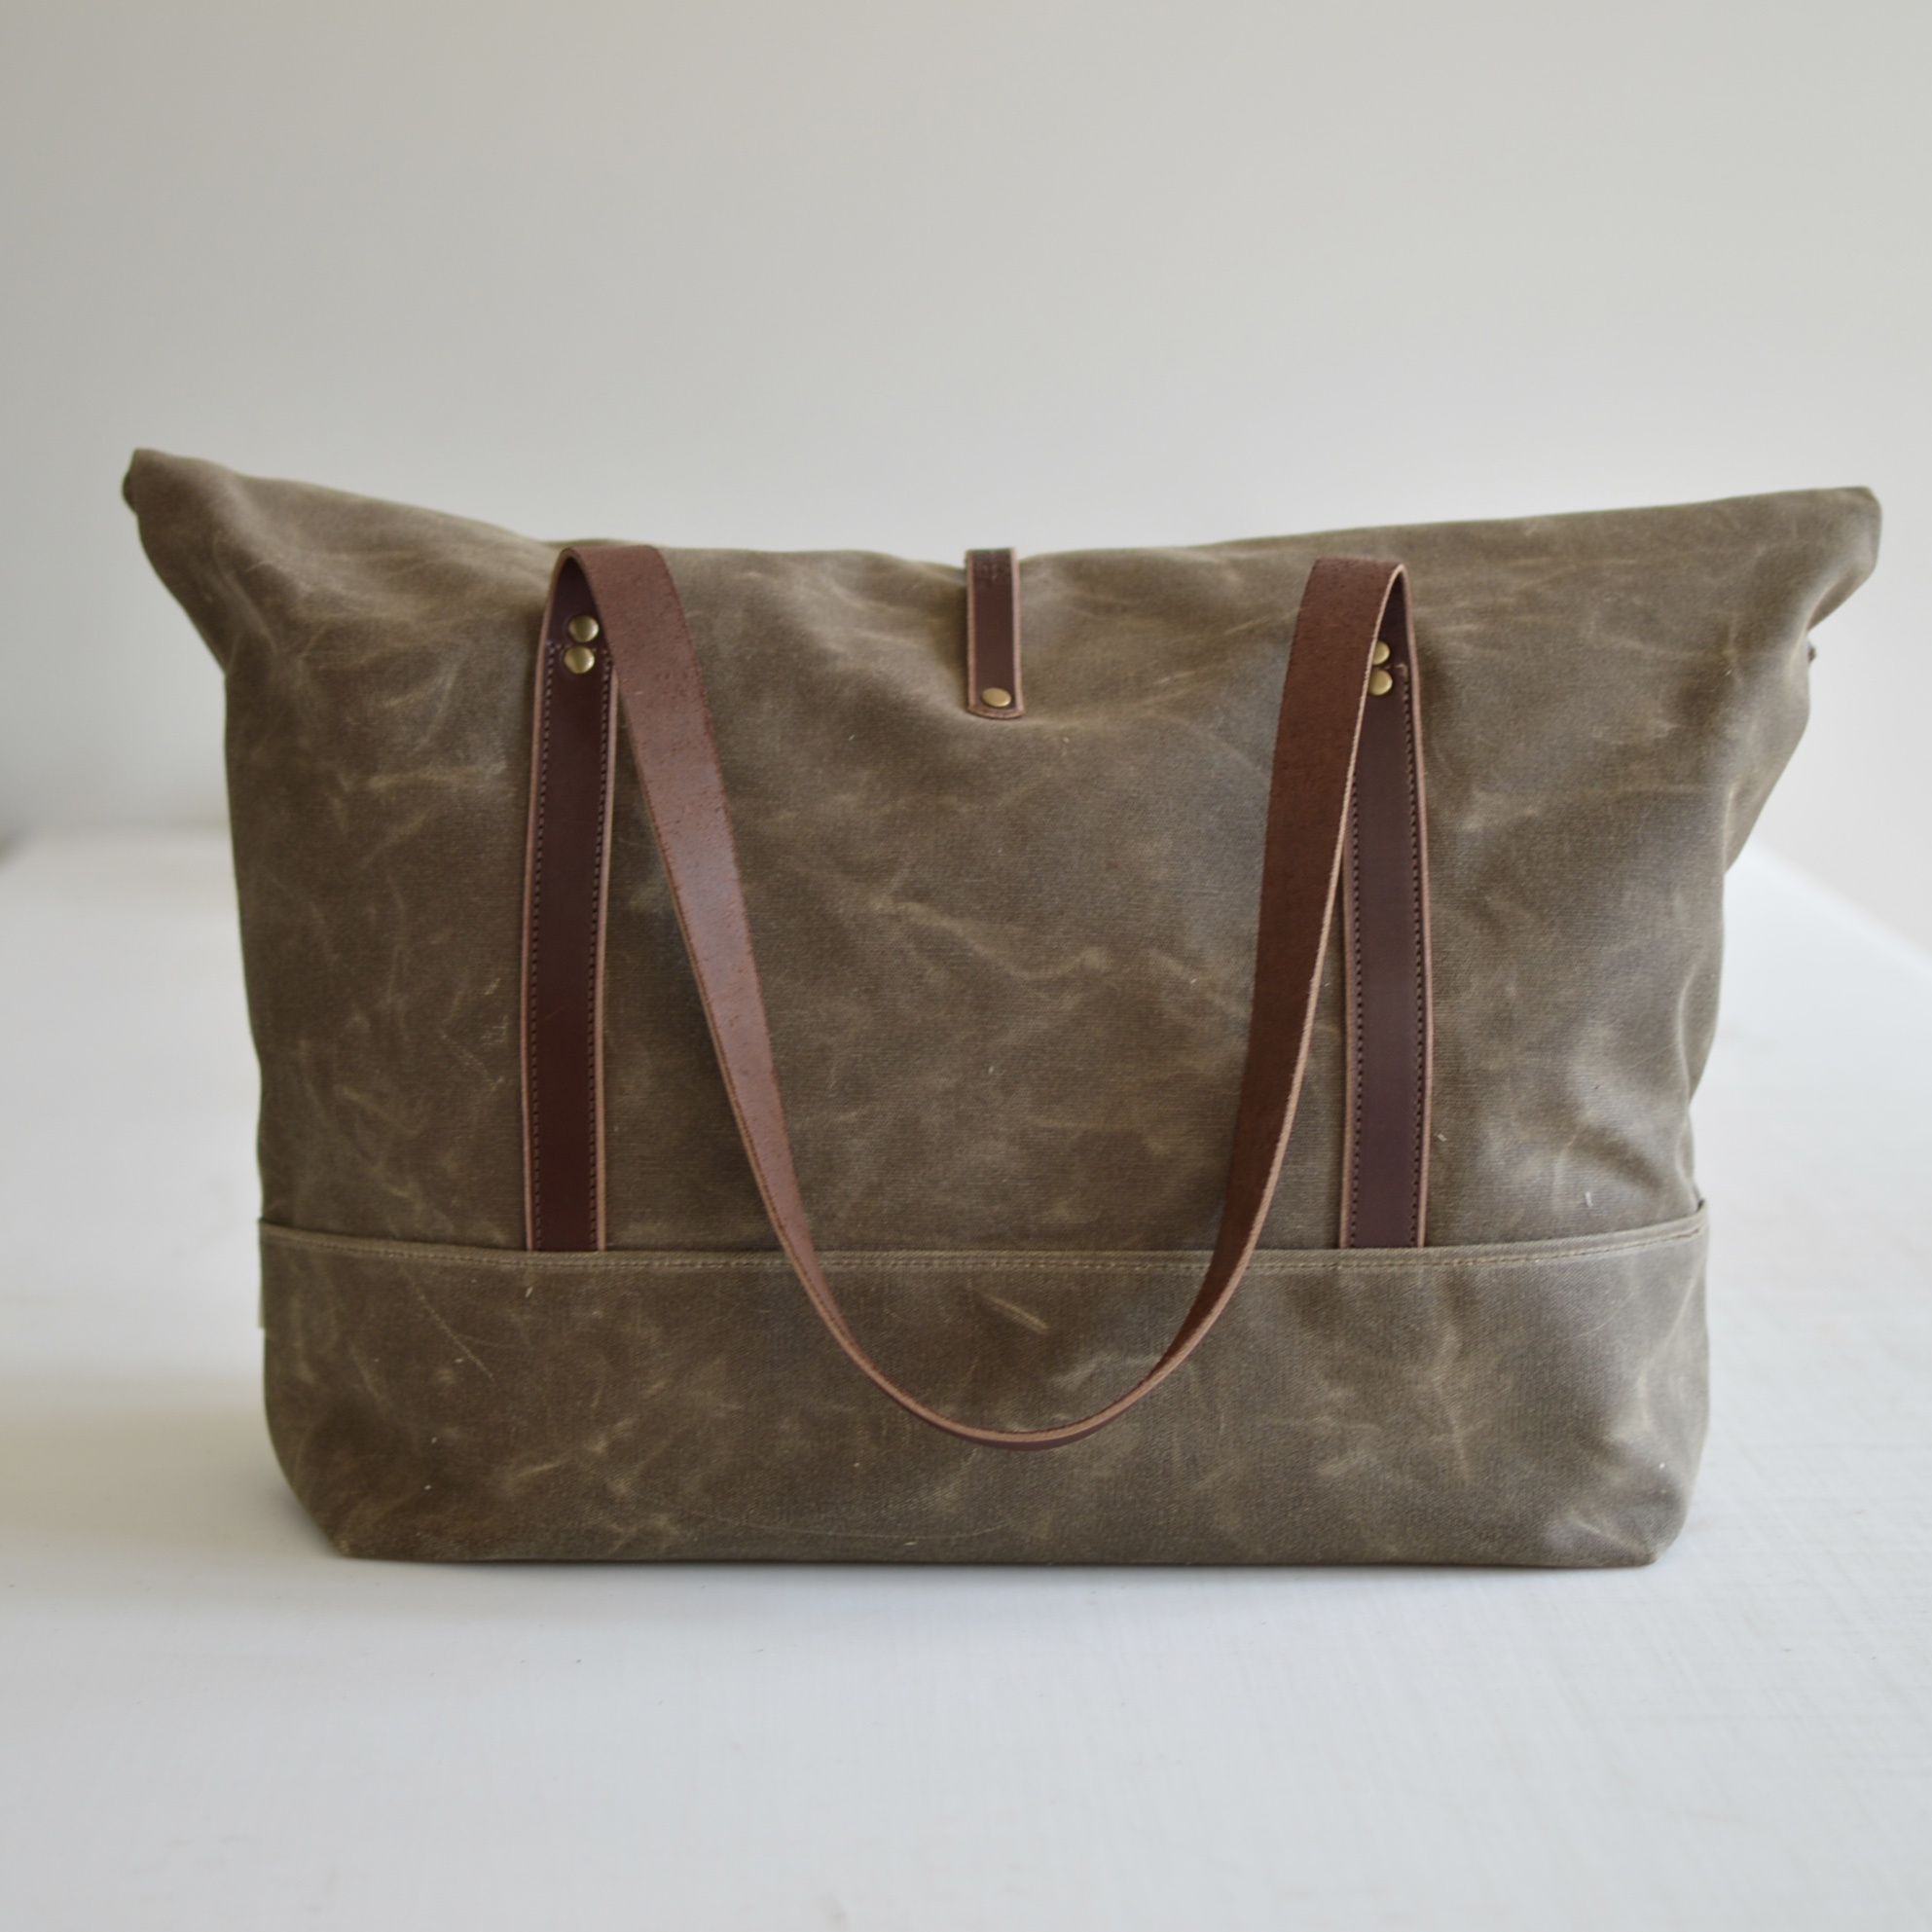 Suede grey or aqua bag